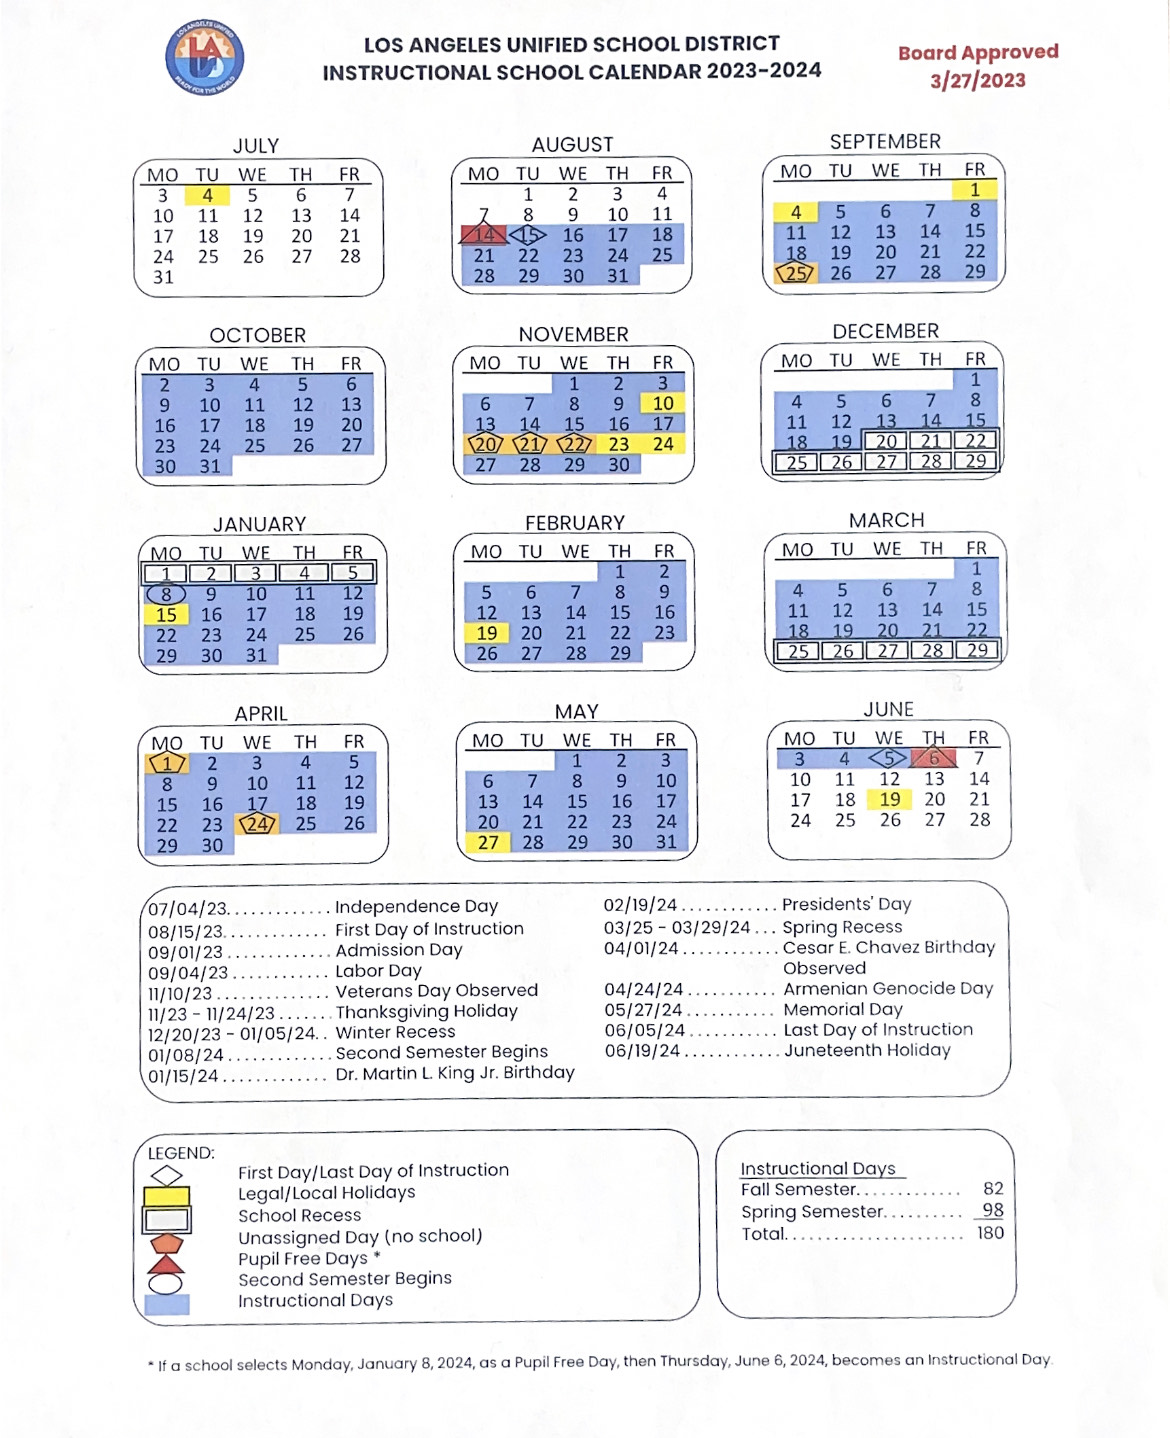 LAUSD new school calendar 2023-2024 – The Federalist